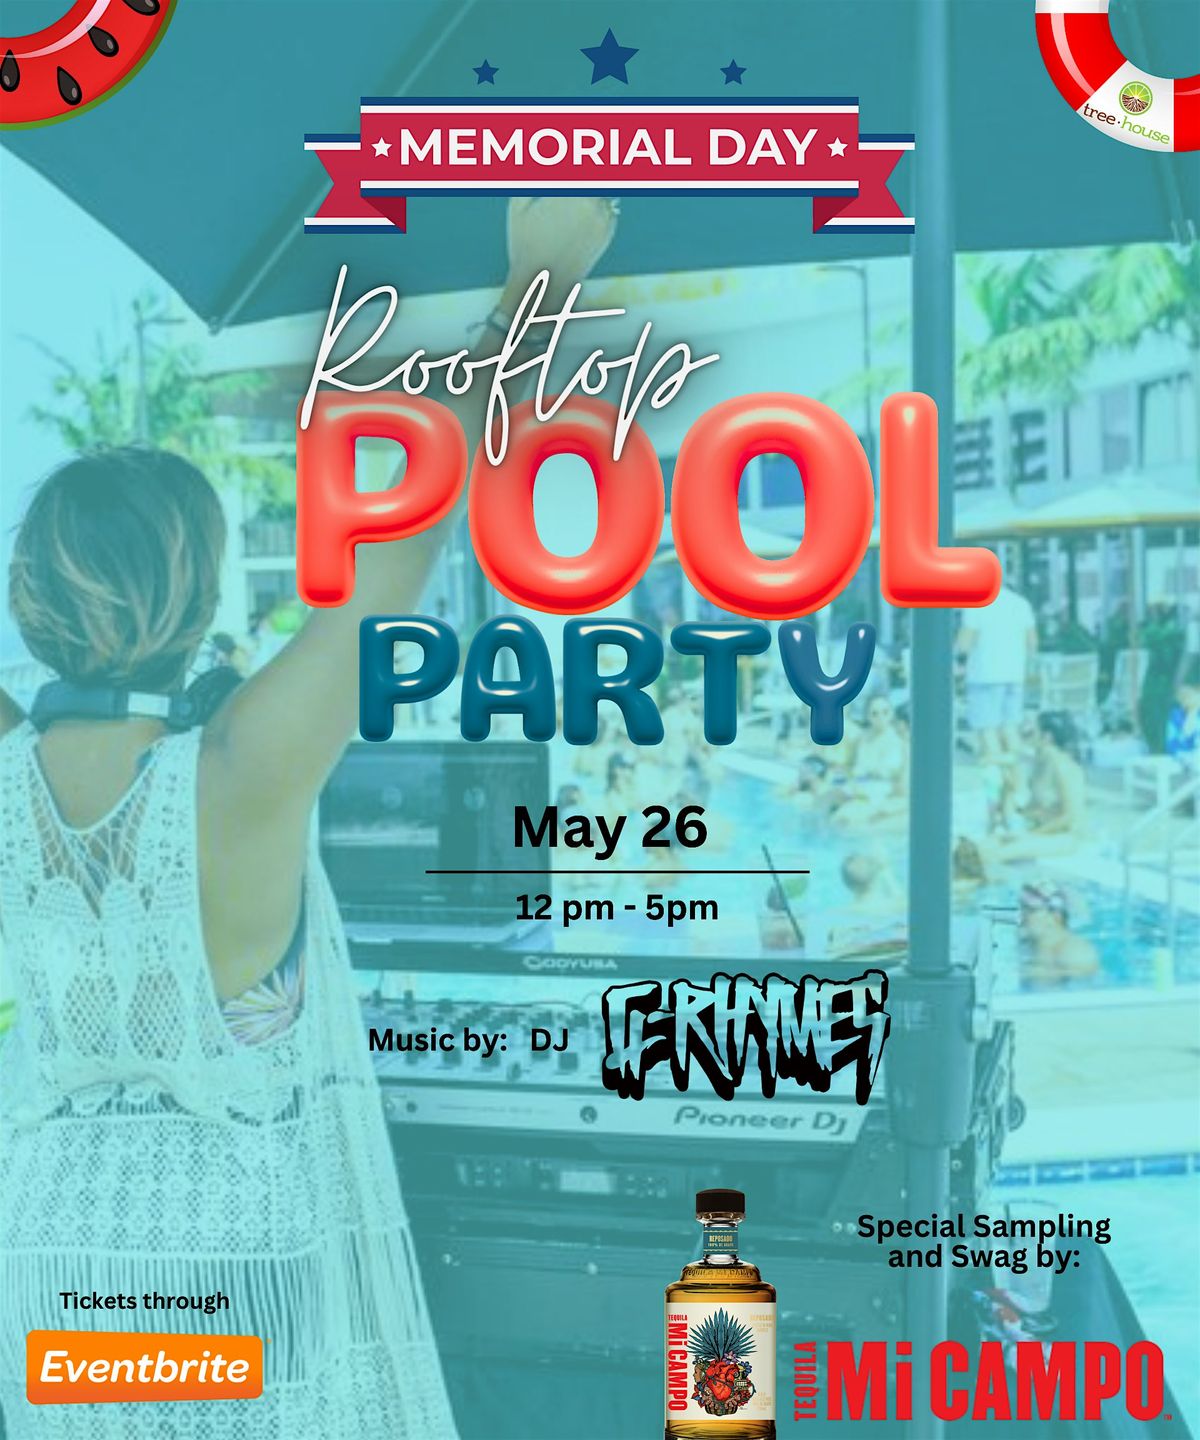 Rooftop Pool Party | Memorial Day Weekend